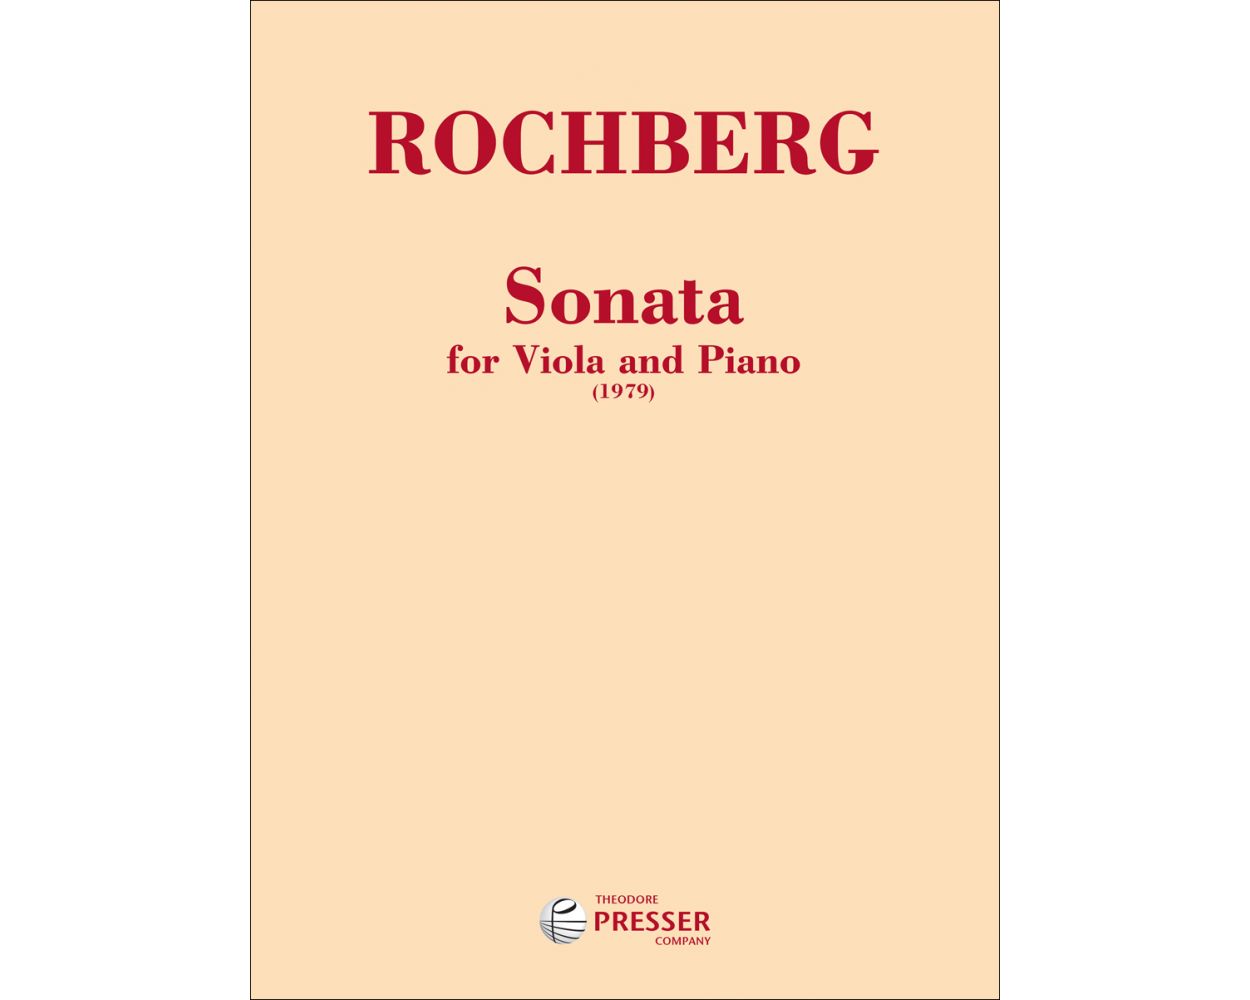 Rochberg Sonata